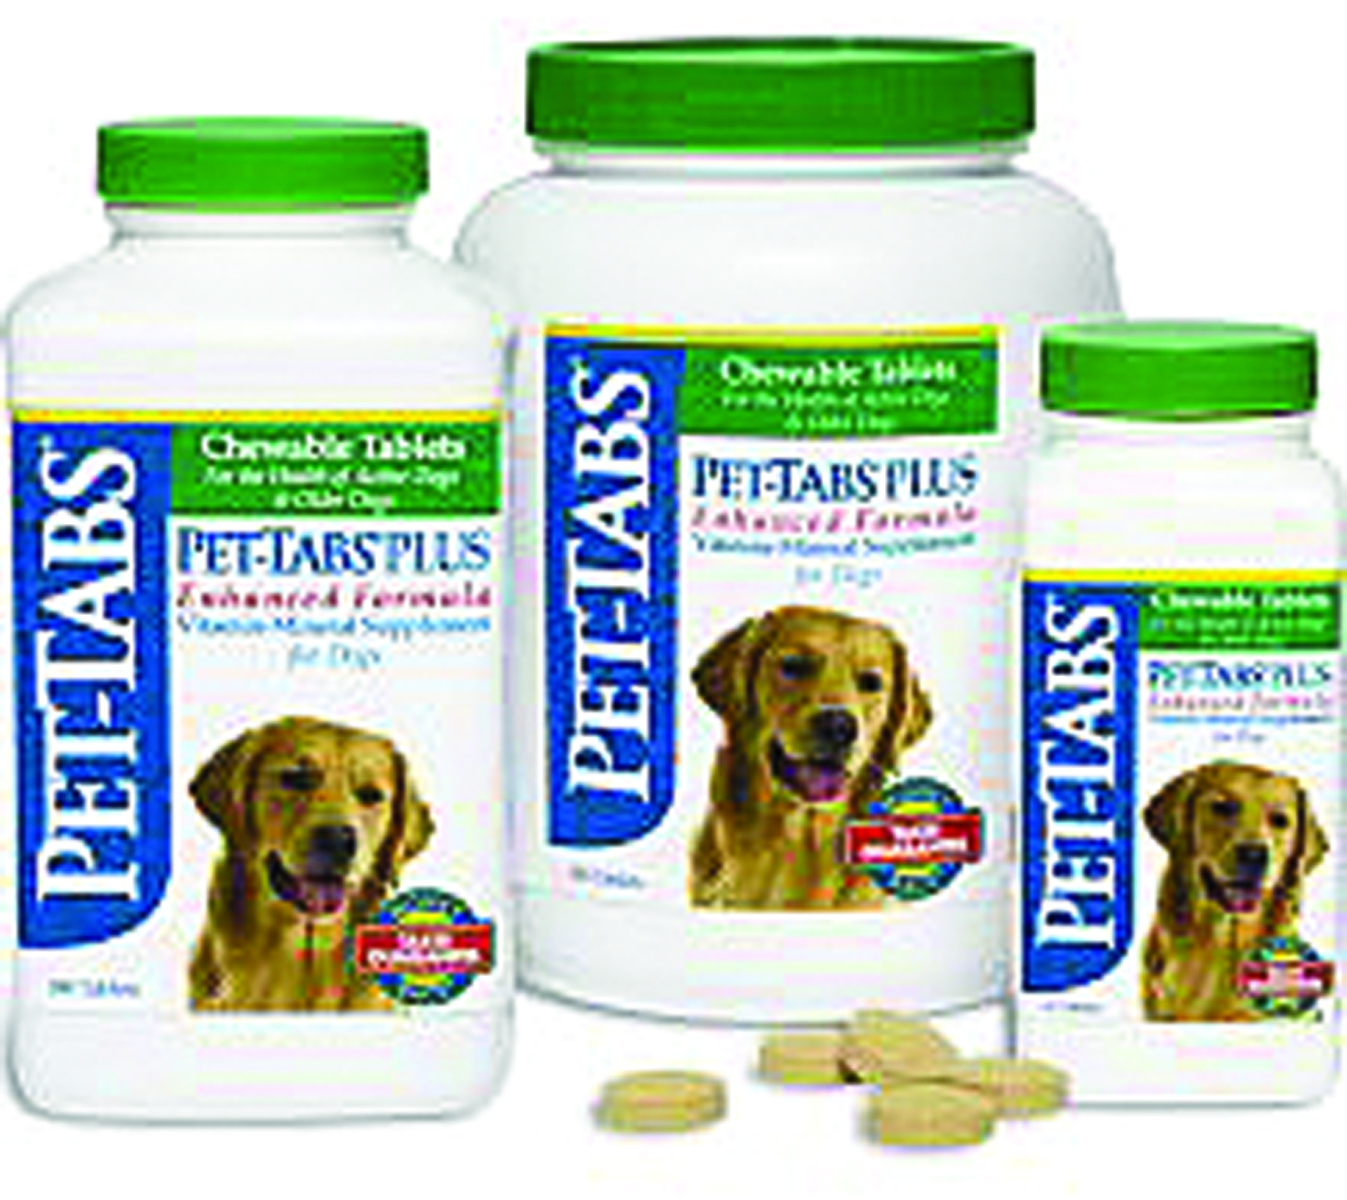 Pet-Tabs Plus Vitamins & Supplements - 60 Tablets